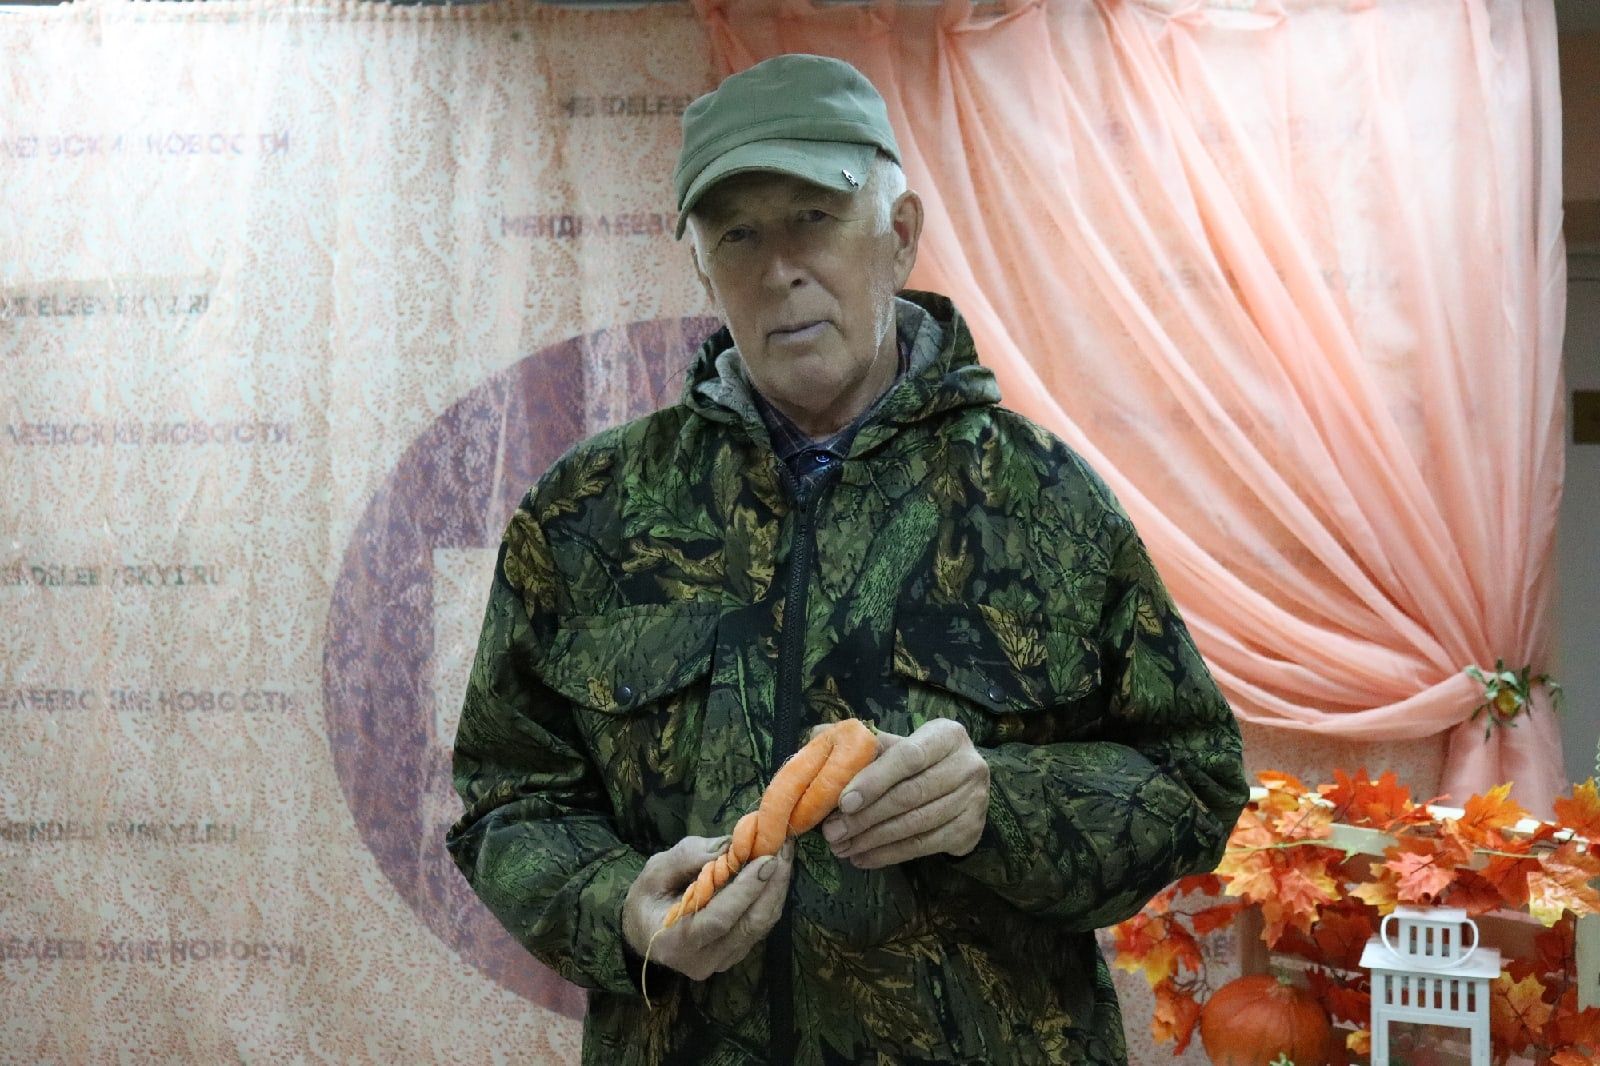 Менделеевец Наиль Валеев представил на конкурс морковь-косичку